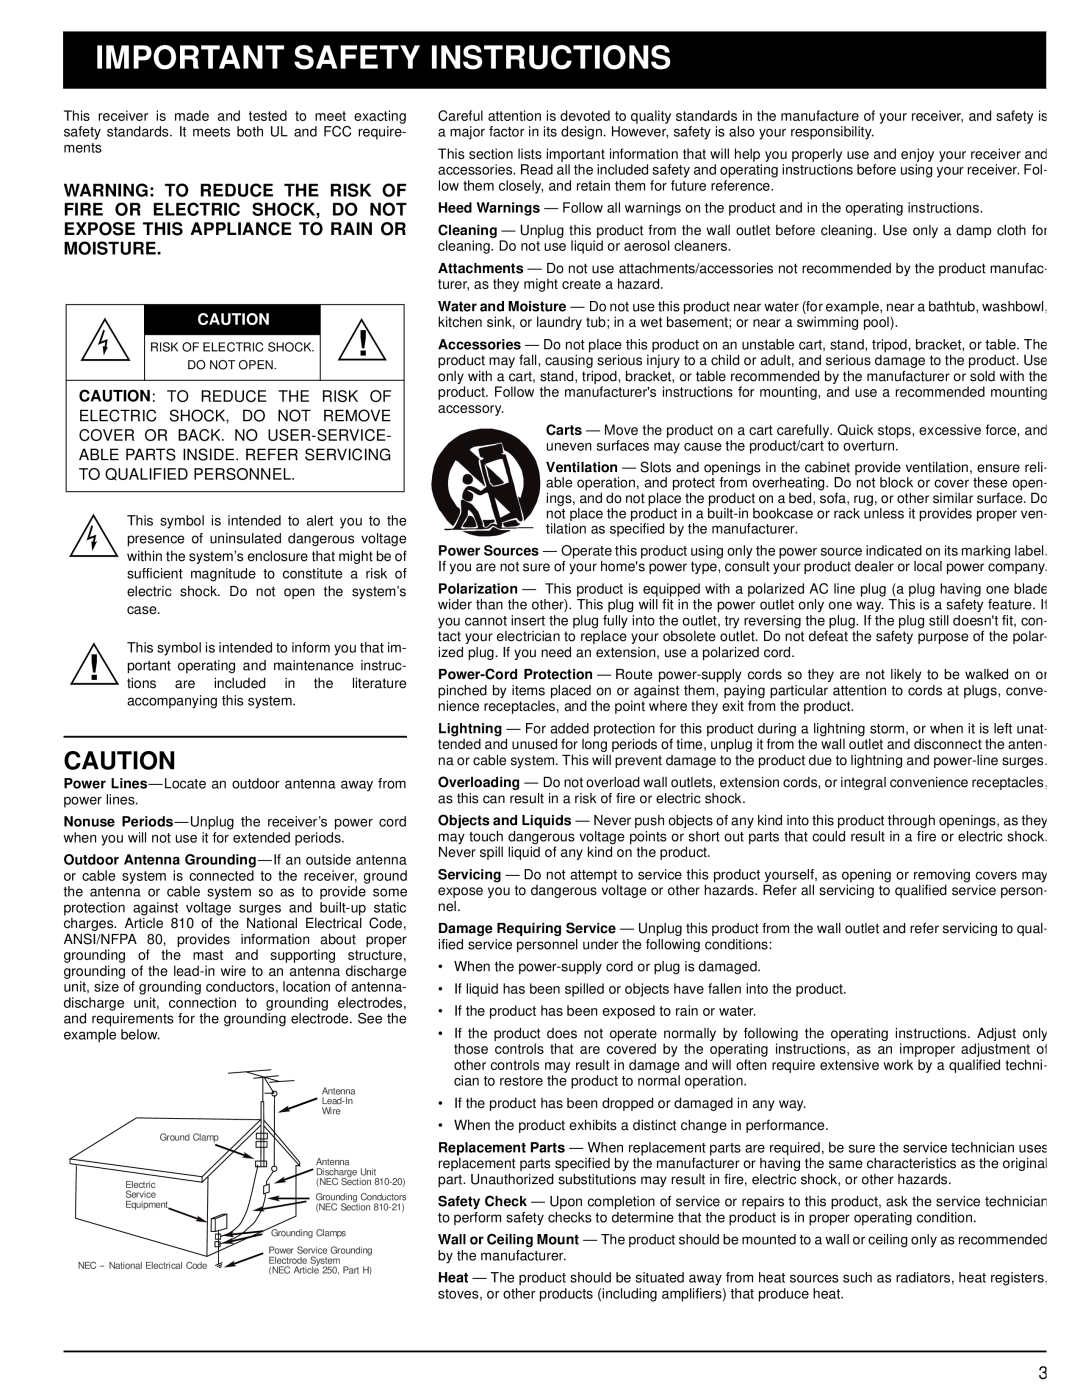 Panasonic STAV-3770 owner manual Important Safety Instructions 